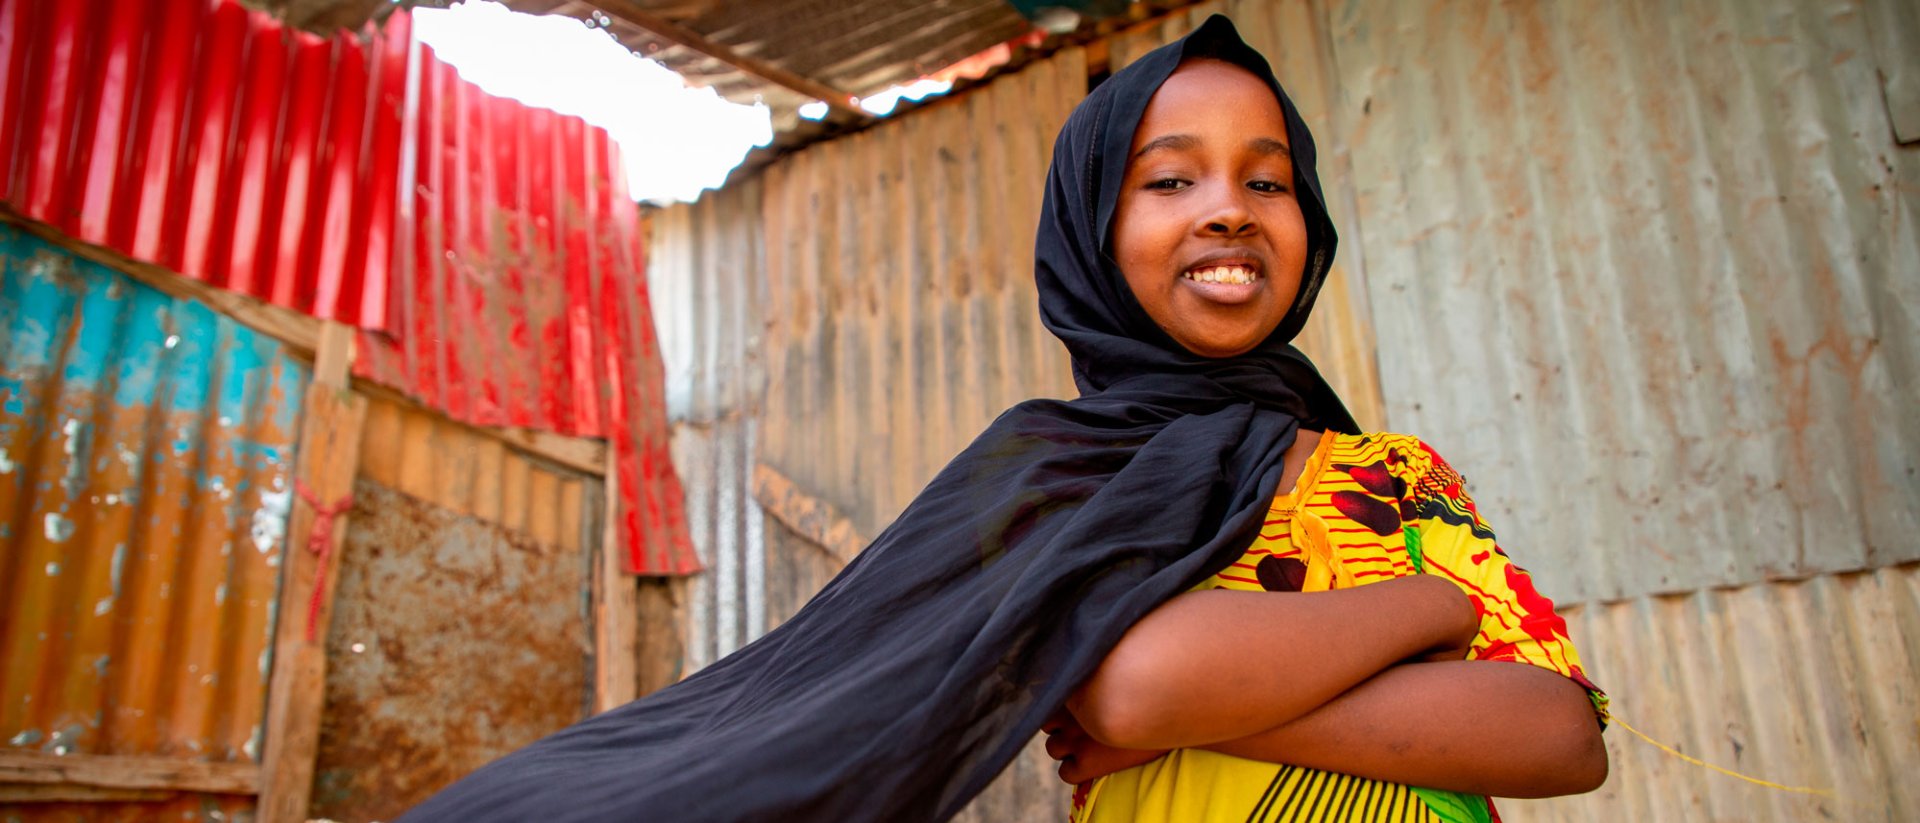 Transparencia Save the Children España - Una niña de Somalia sonriendo